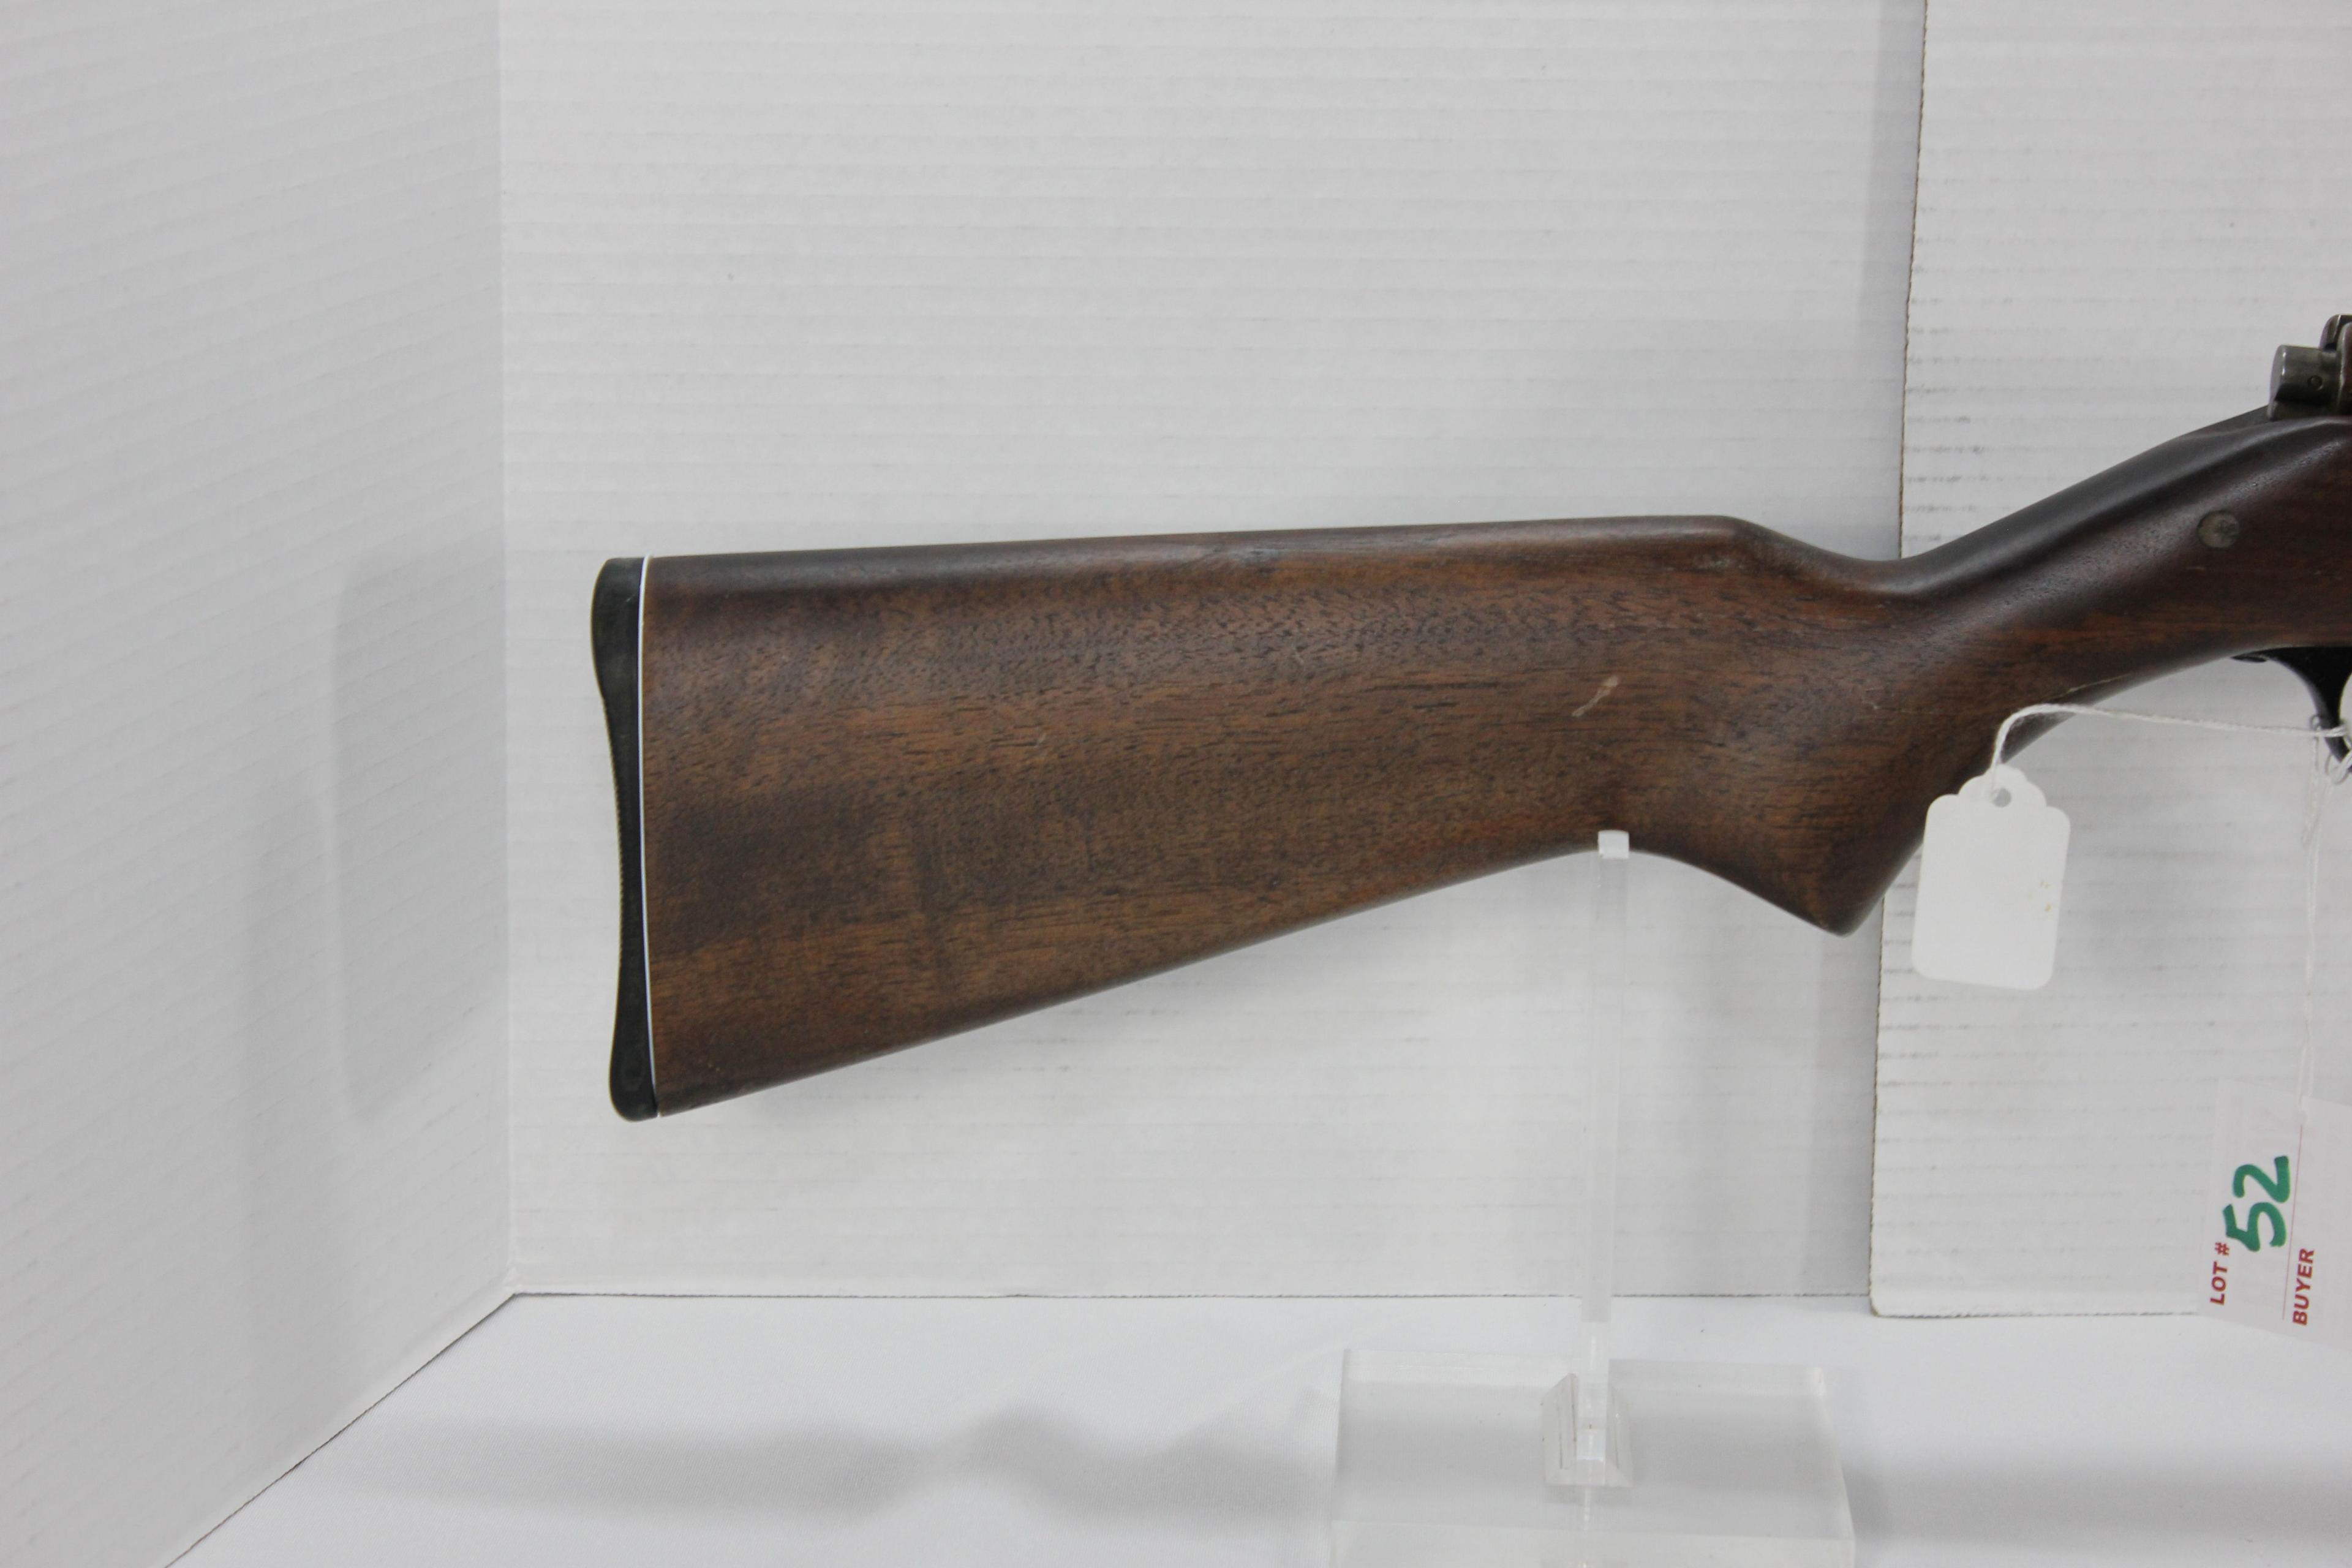 Stevens Model 59A .410 Ga. 2-1/2" or 3" Cham. Tube Fed Bolt Action Shotgun w/24" BBL; SN N/A; In Nee